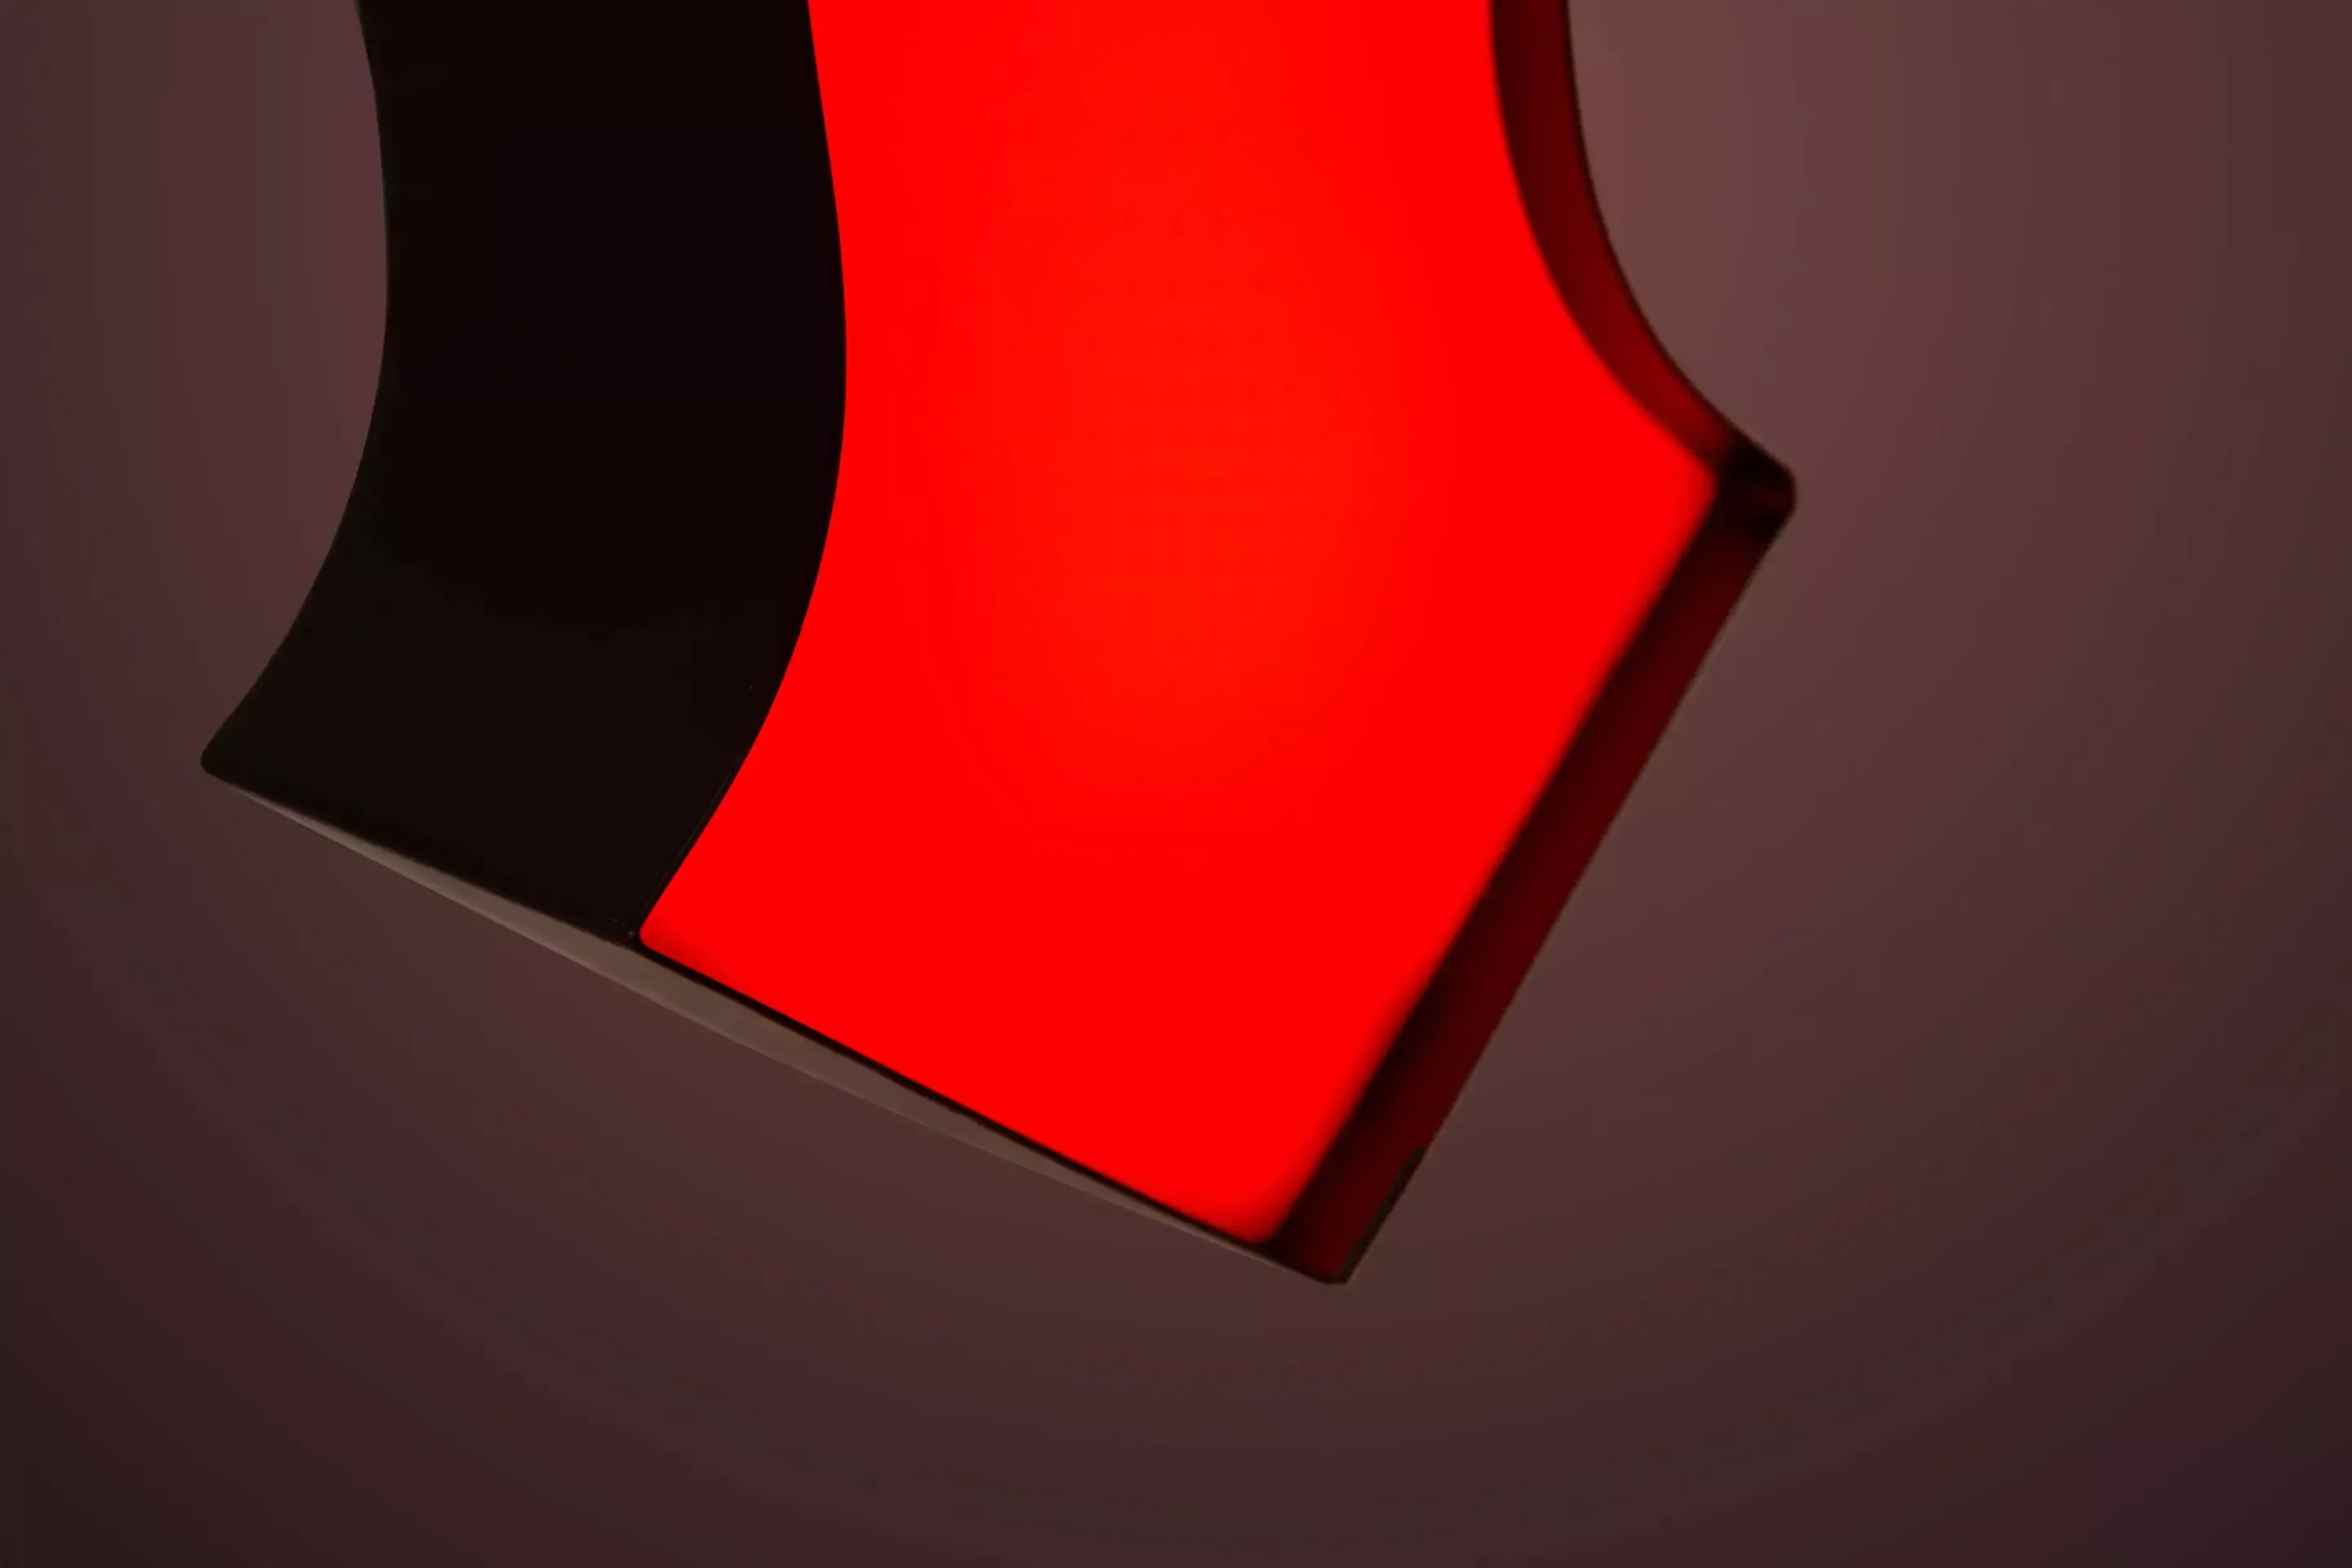 Letter M - aangepaste LED verlichte letter in rood, detail